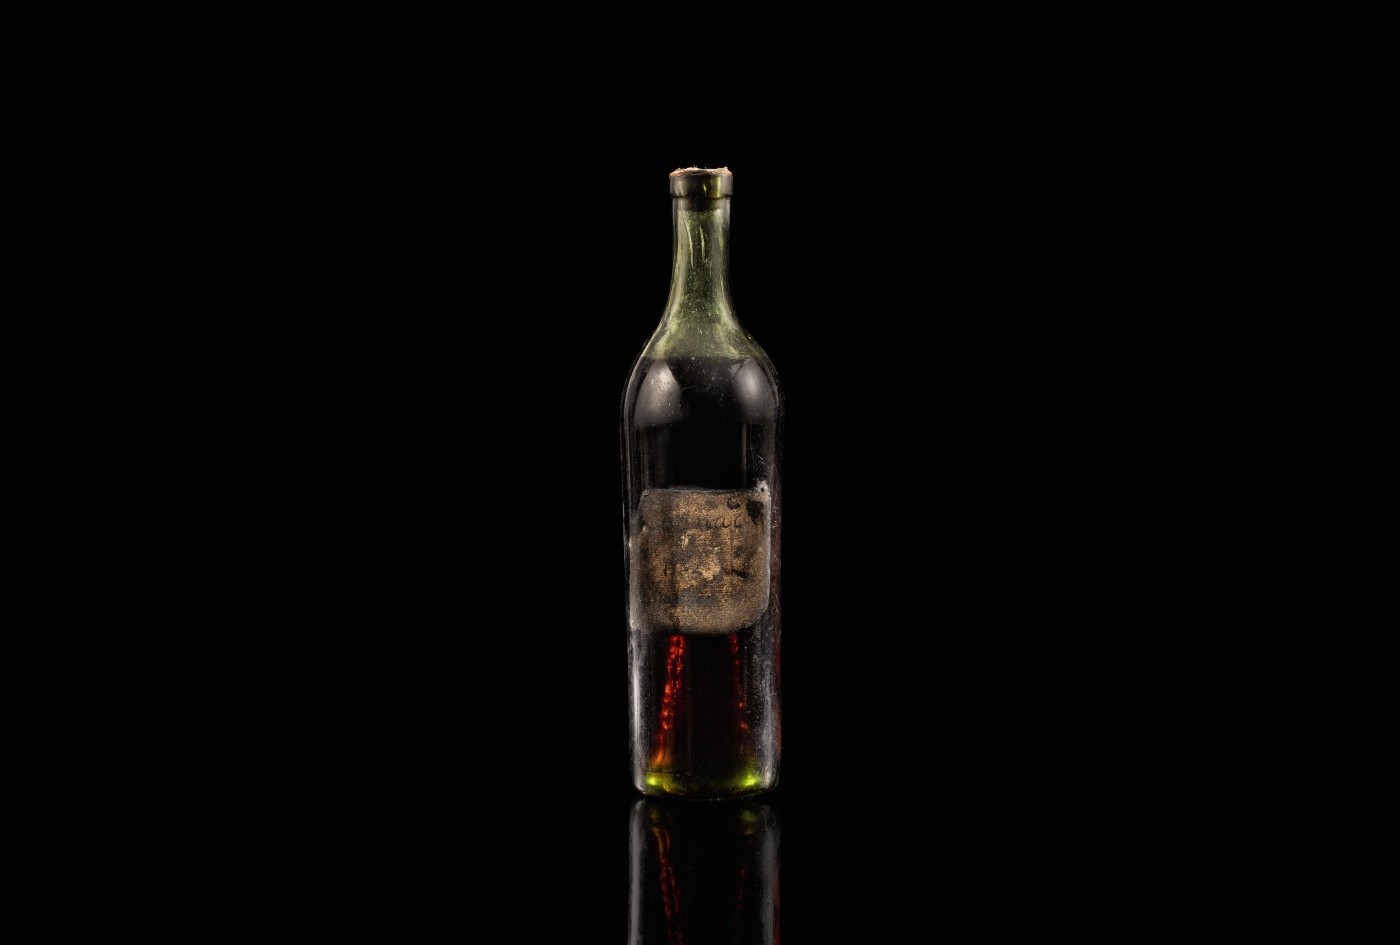 A bottle of Gautier Cognac 1762